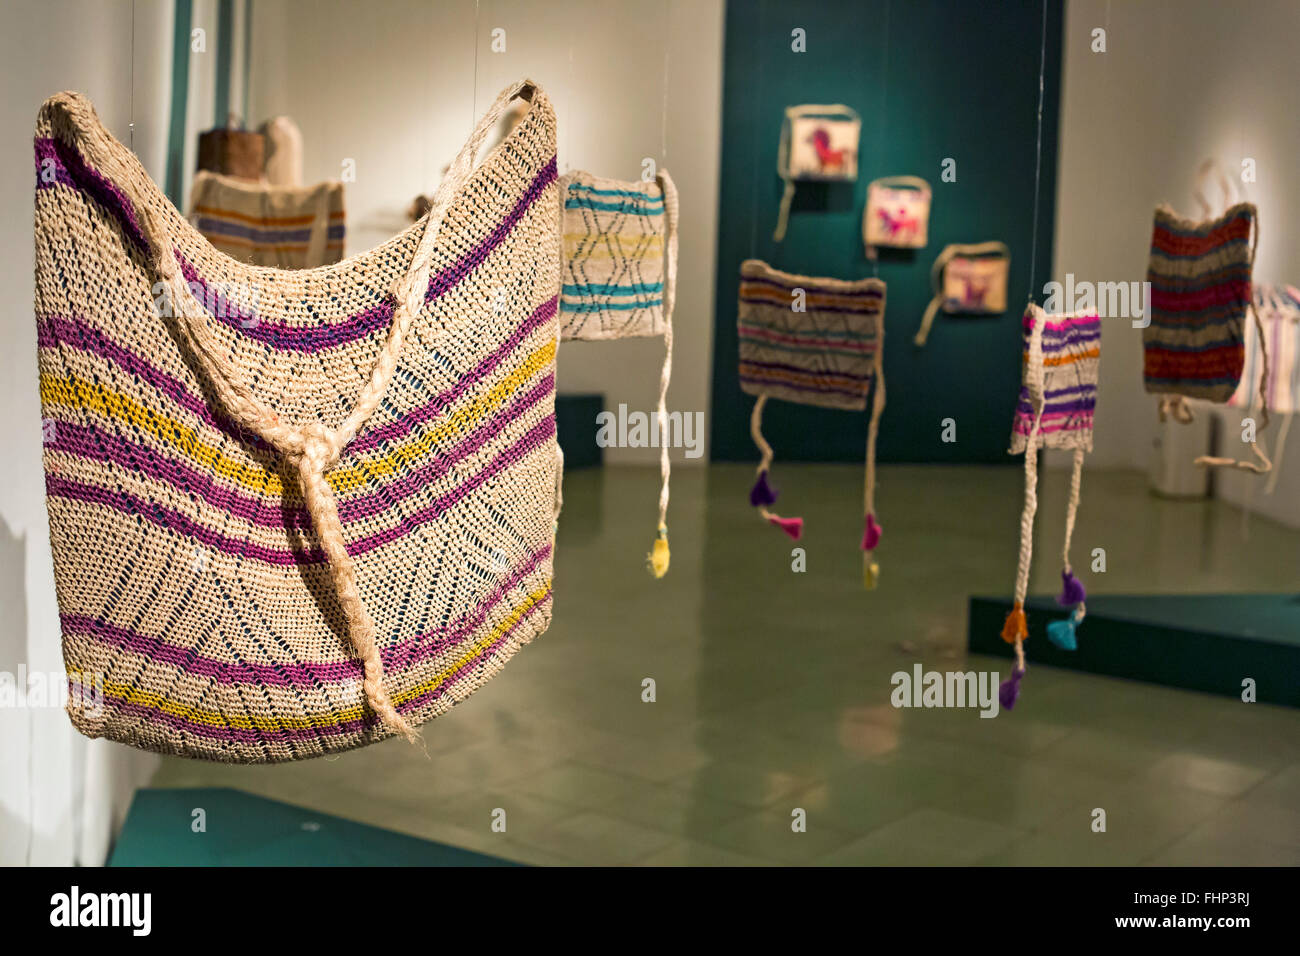 Oaxaca, Mexique - Sacs fabriqués de fibres de l'agave, exposée au Musée du Textile, de l'Oaxaca. Banque D'Images